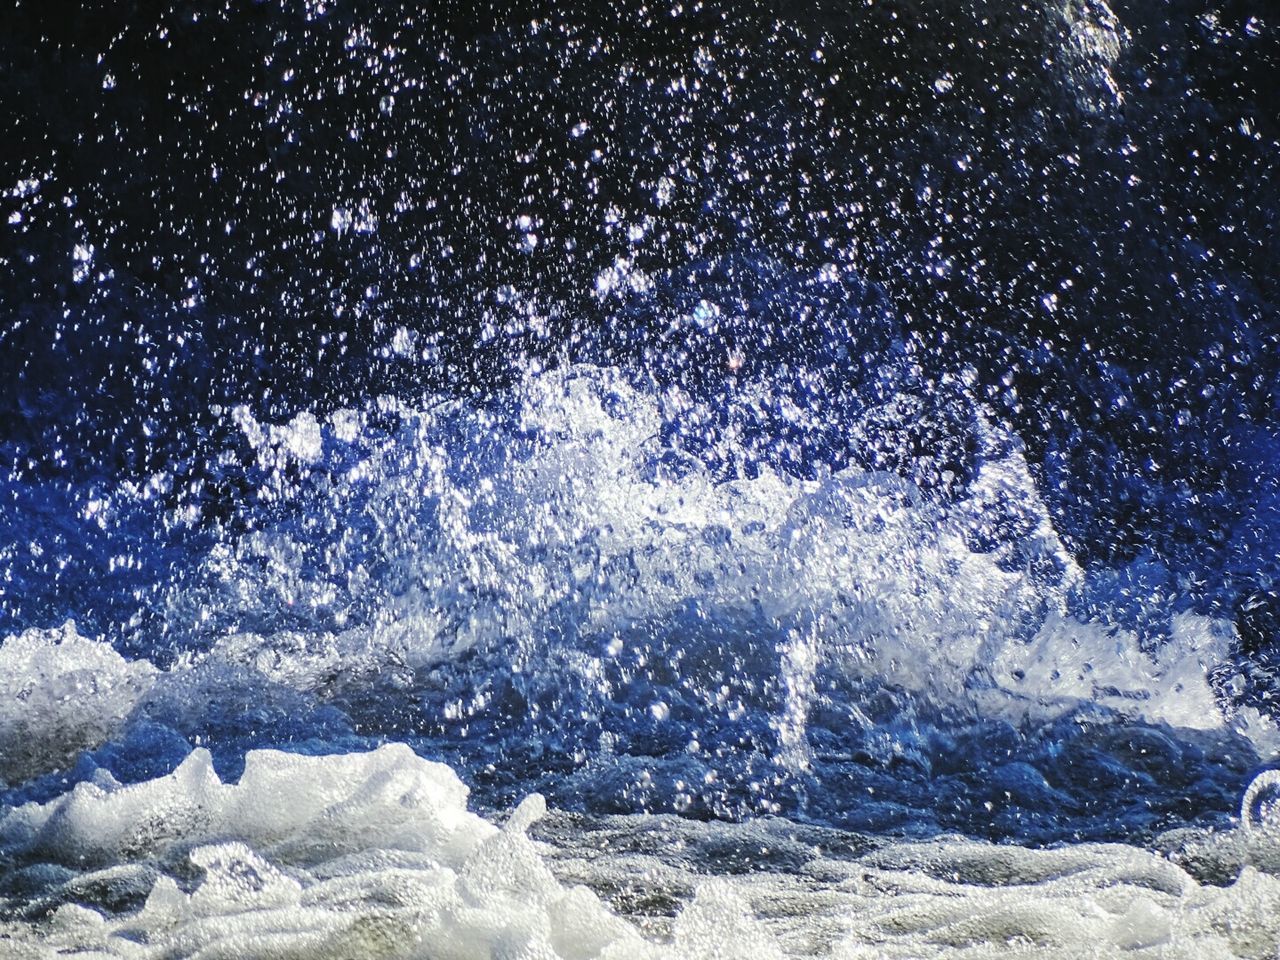 Wave splashing in sea